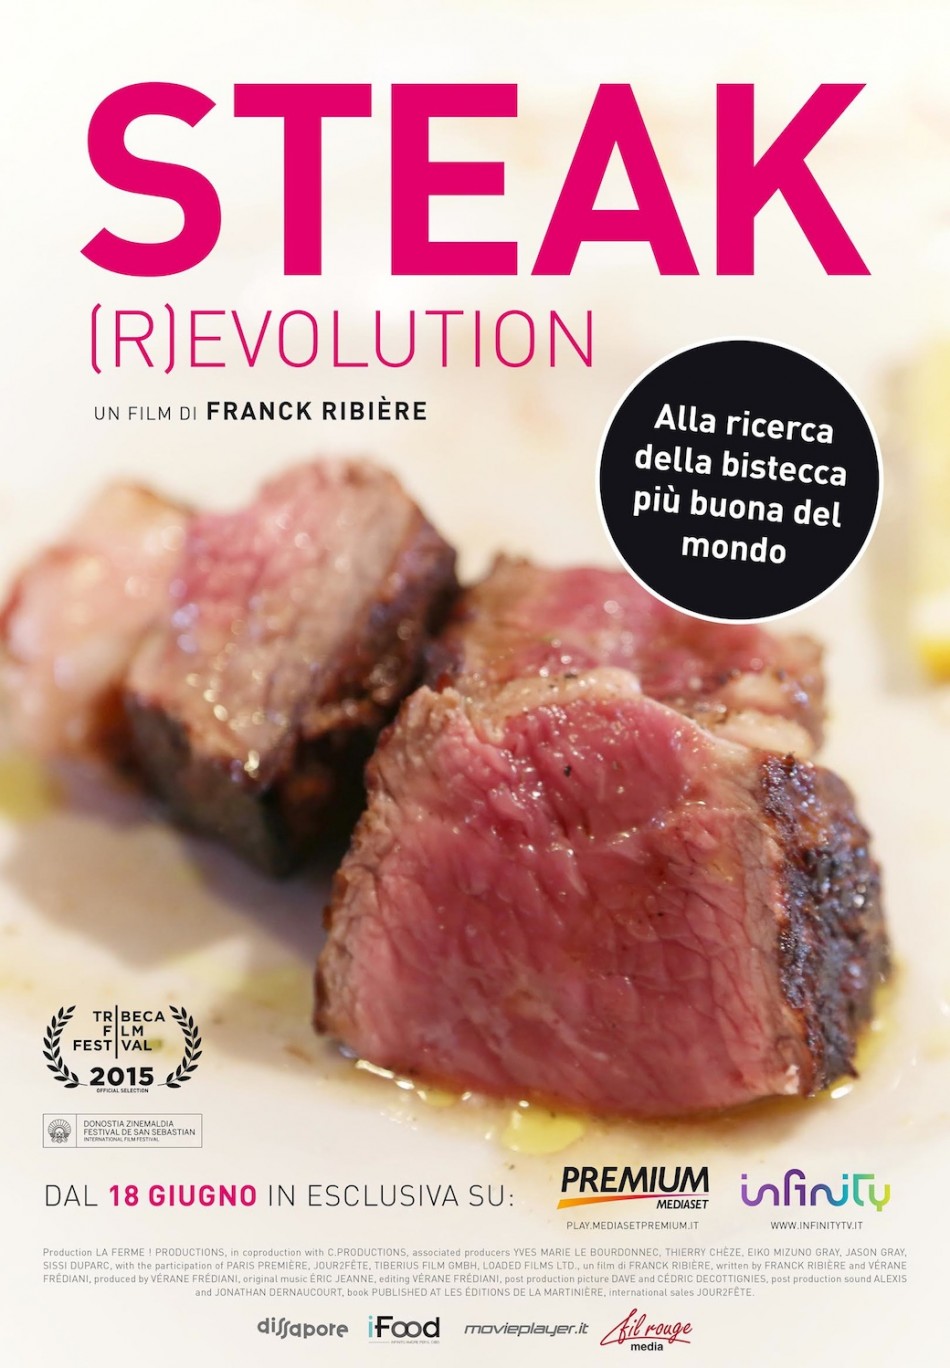 Steak Revolution manifesto